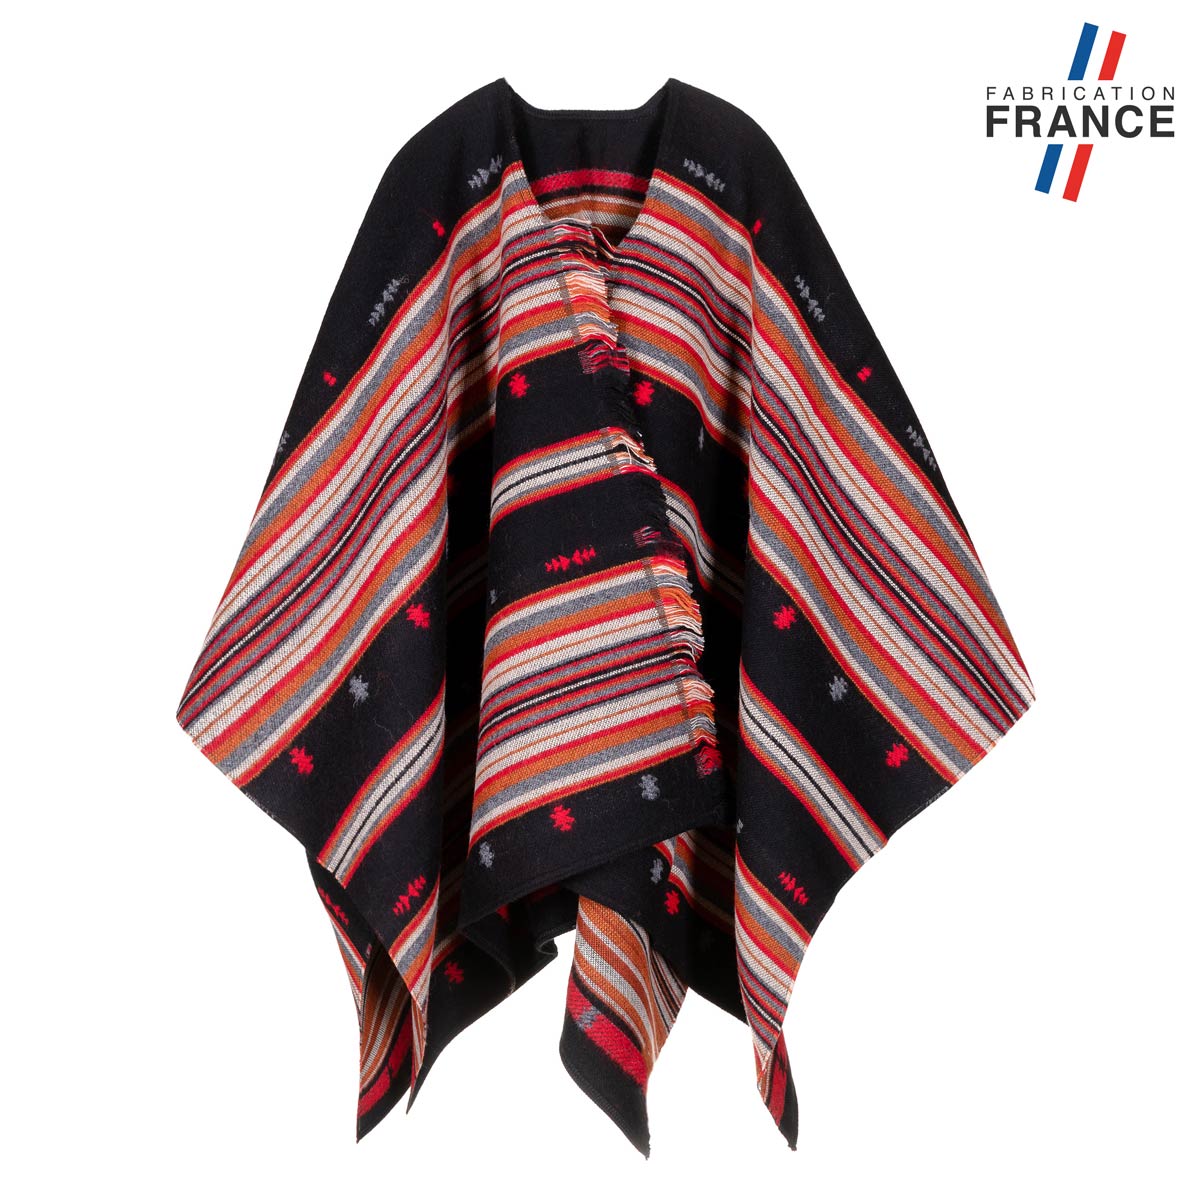 Poncho-femme-raye-noir-rouge-fabrication-francaise--AT-06181_F12-1FR